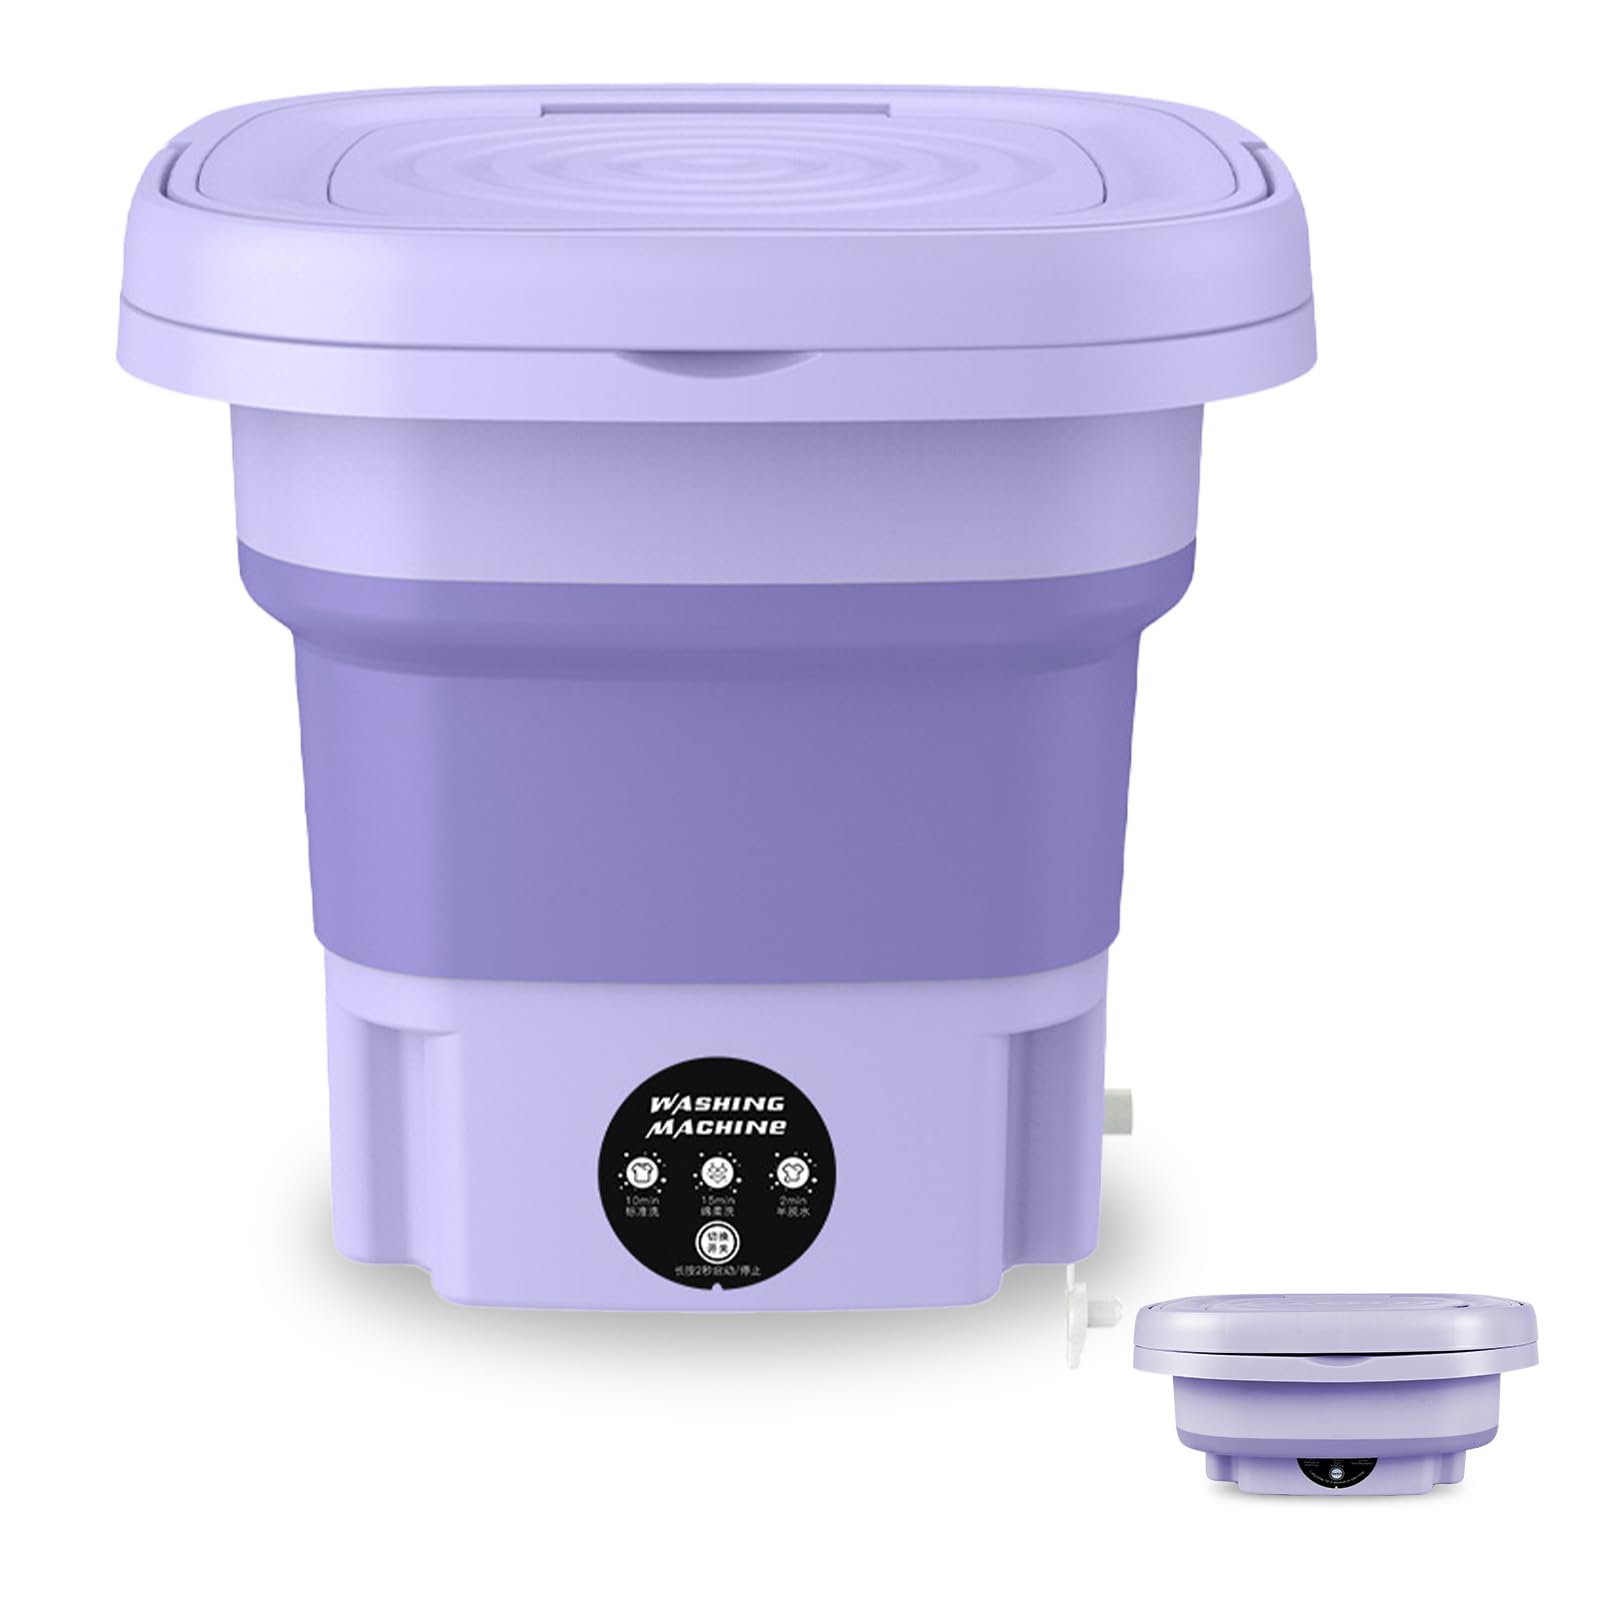 Portable Mini Washing Machine in purple color, compact and foldable design.